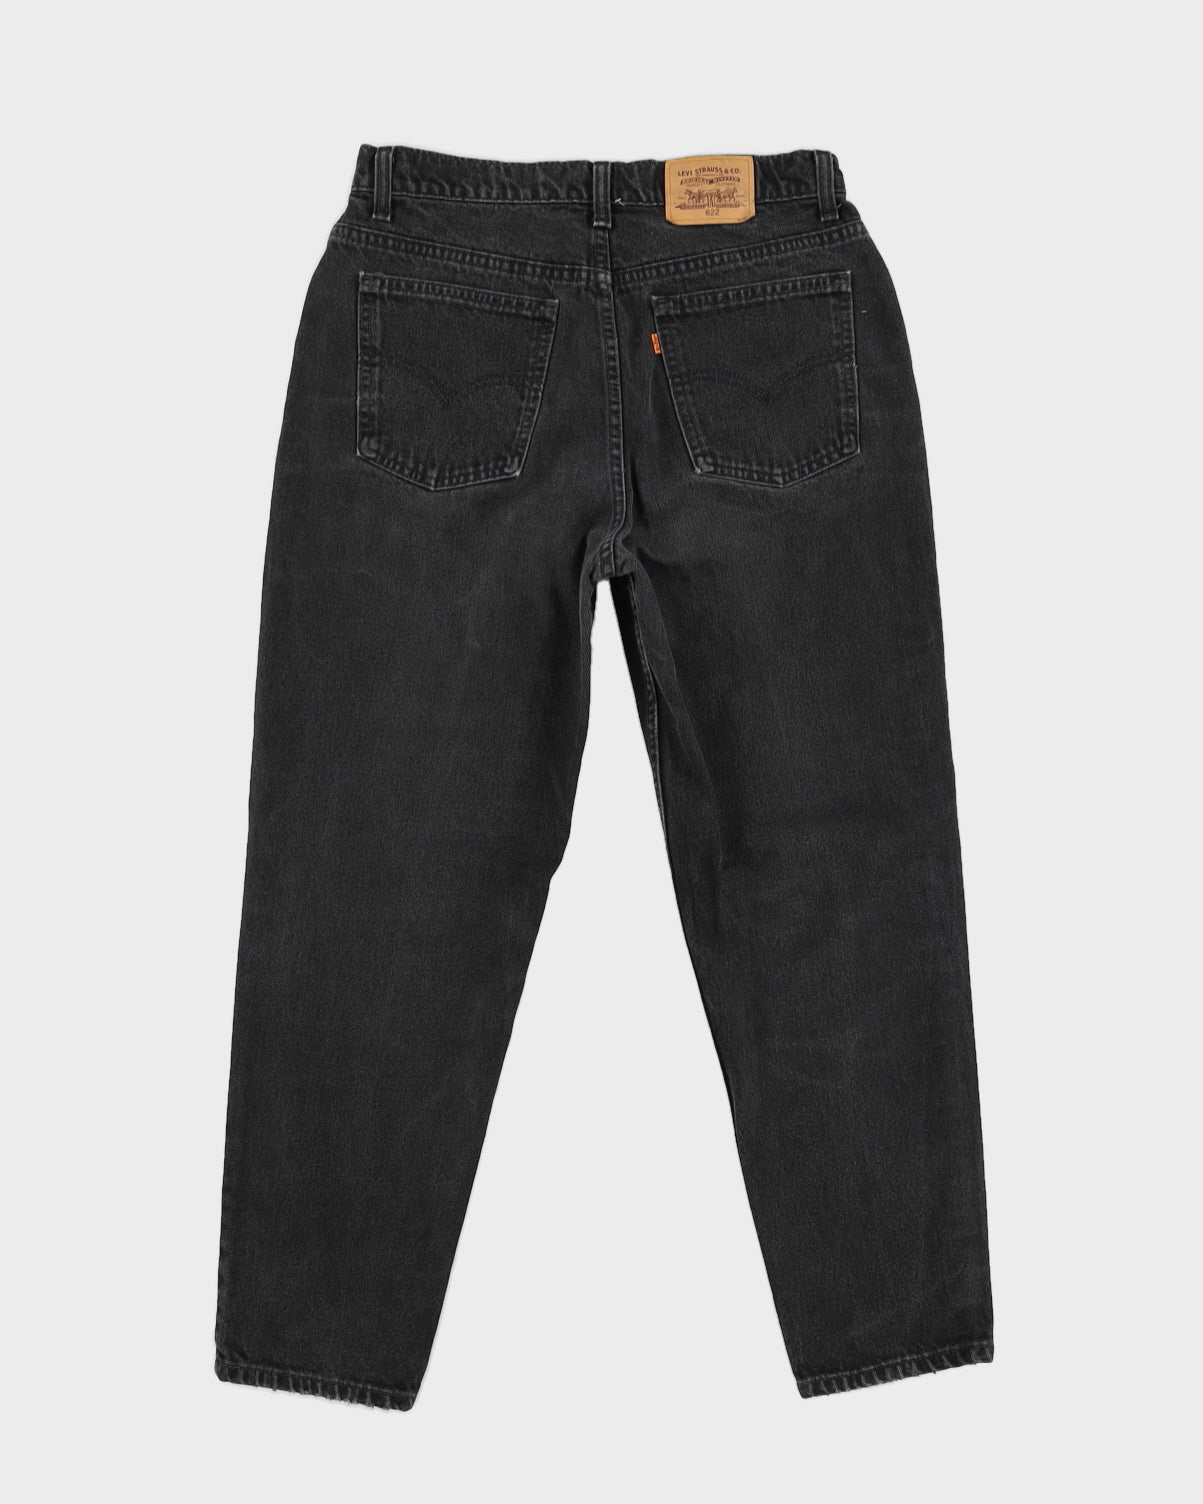 Vintage 80s Levi's Orange Tab Black Jeans - W32 L28